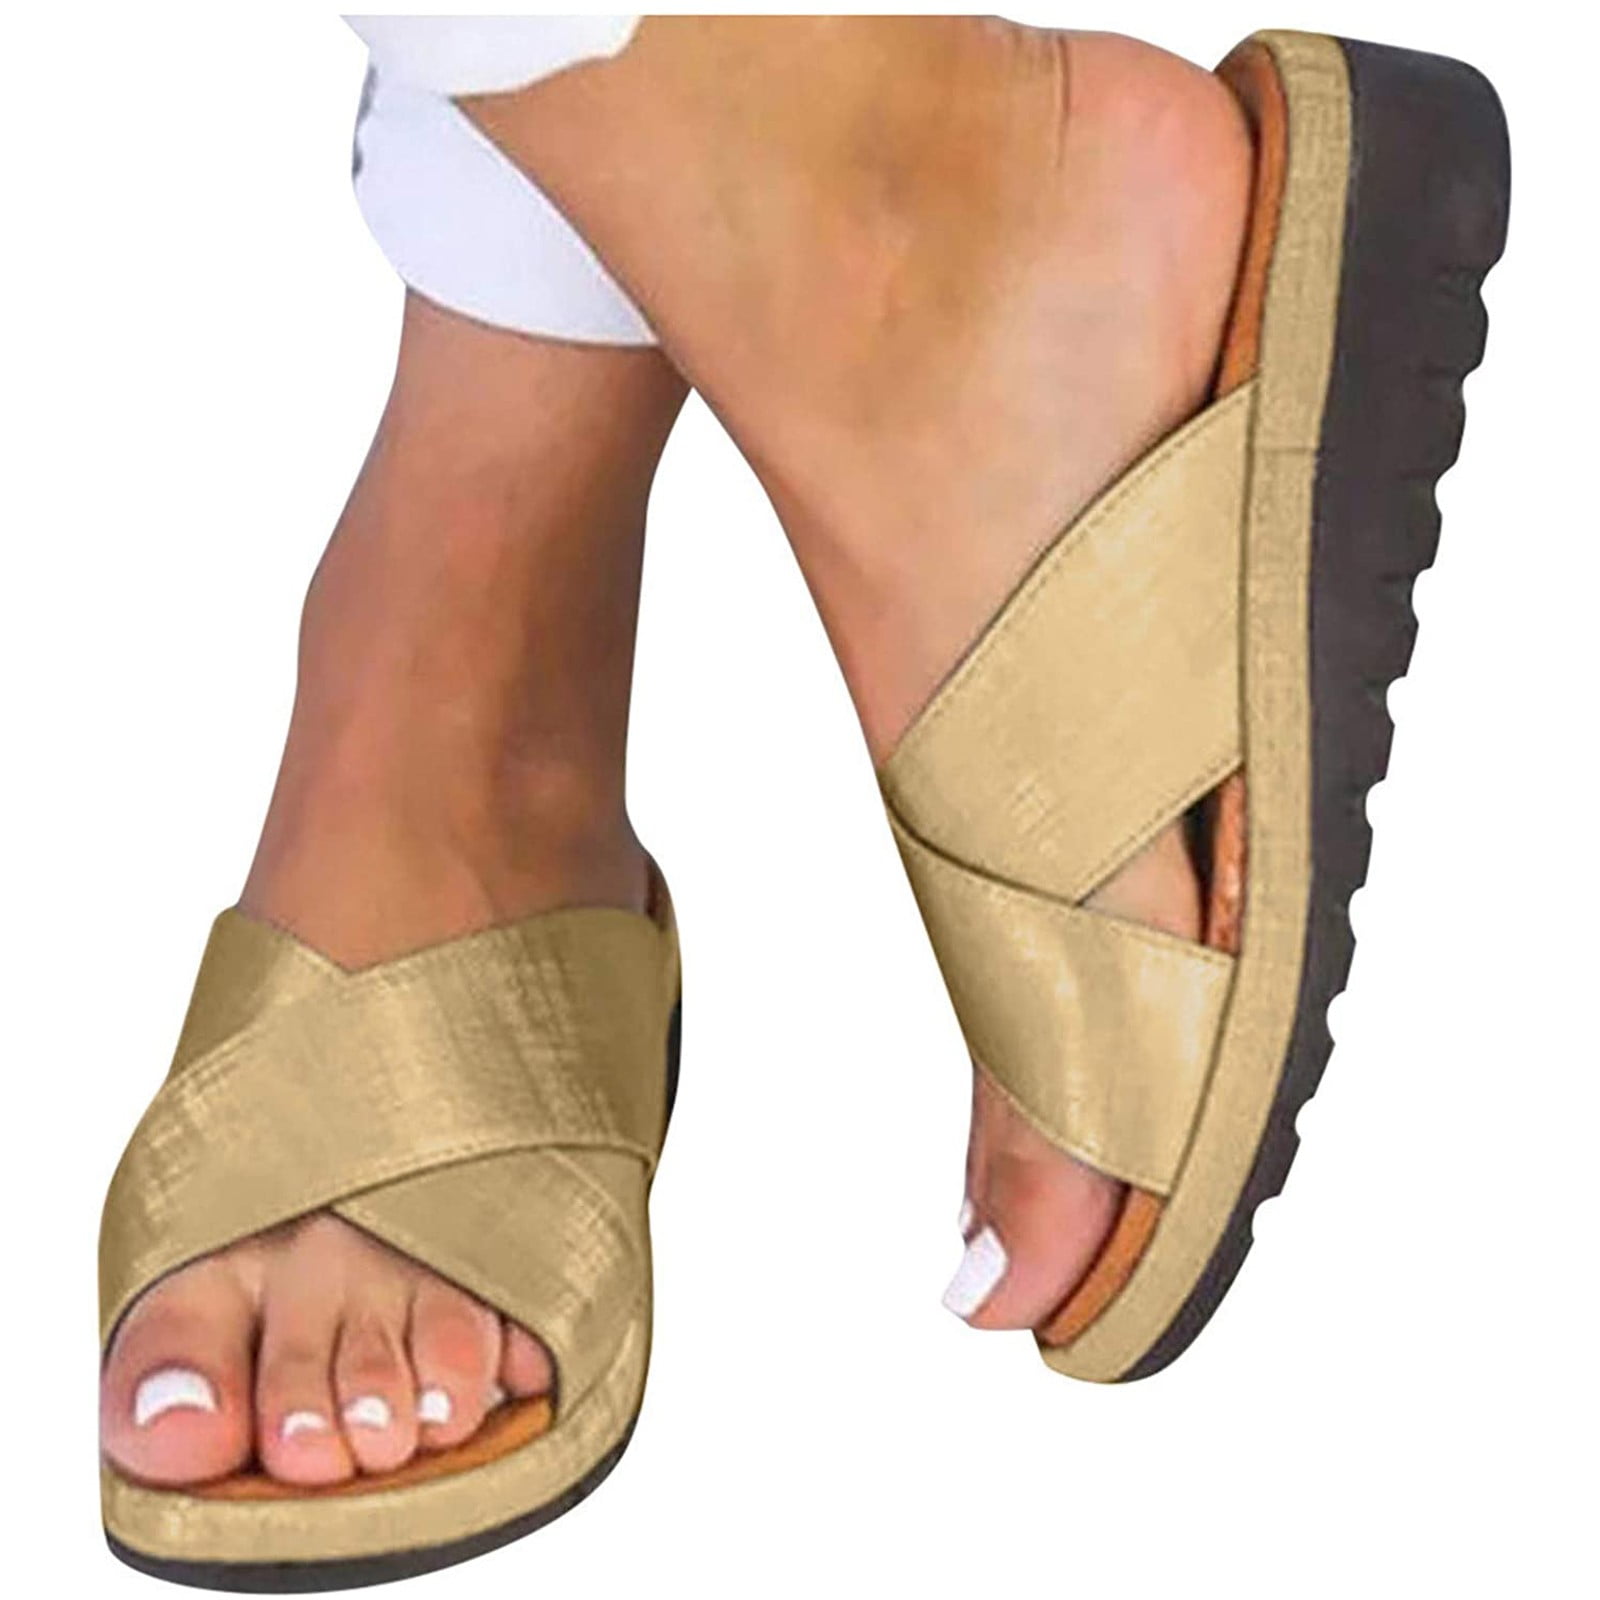 Sandals for Women Wide Width,Womens 2020 Comfy Platform Sandal Shoes Summer Beach Travel Fashion Slipper Flip Flops 